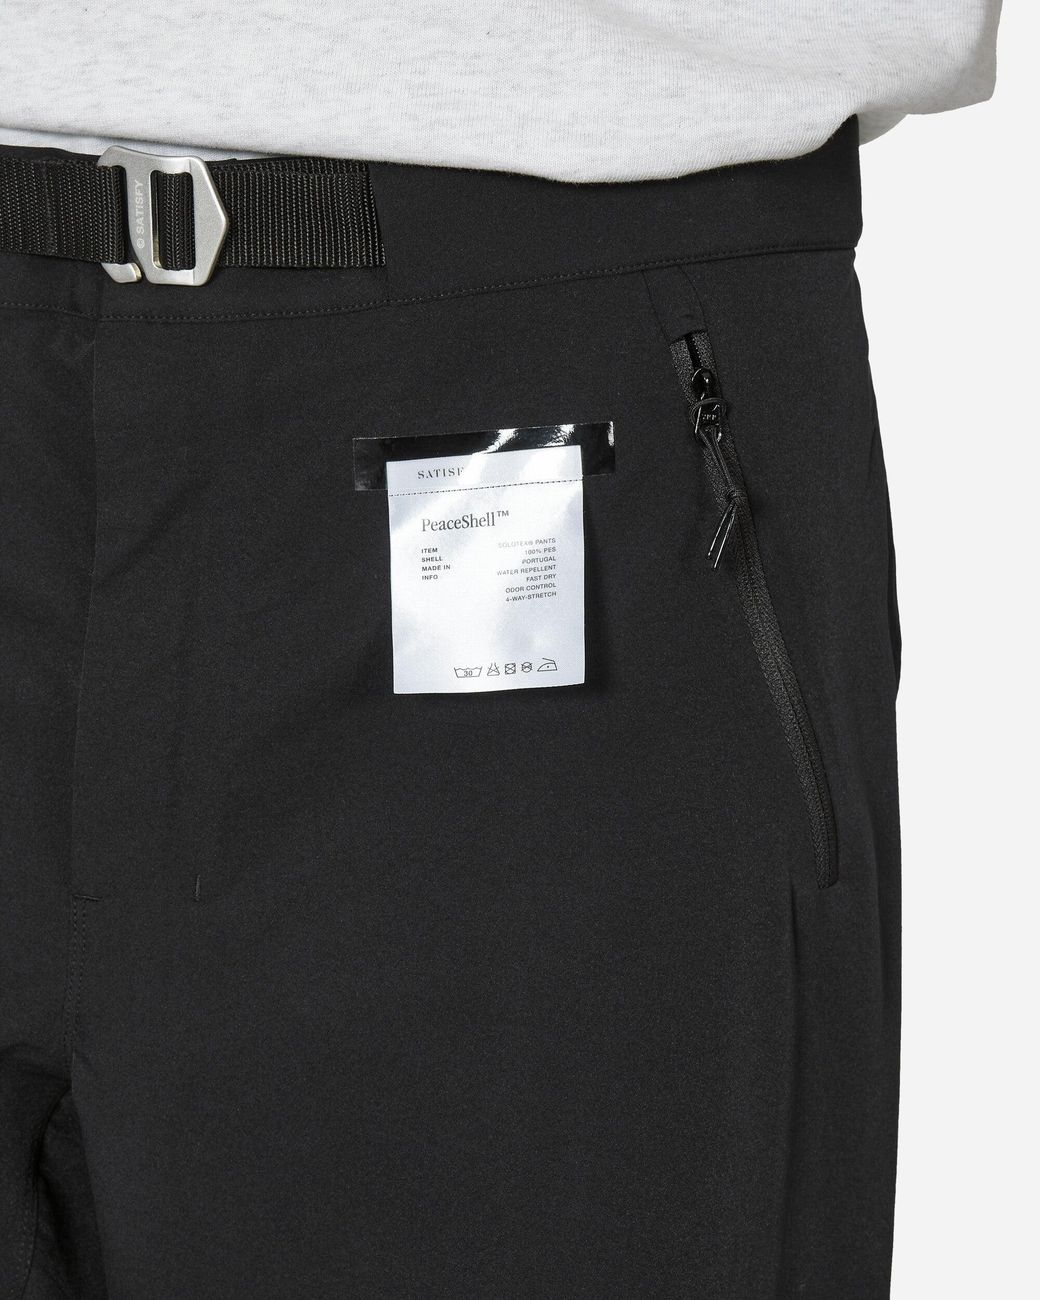 Satisfy Peaceshelltm Solotex® Hiking Pants in Black for Men